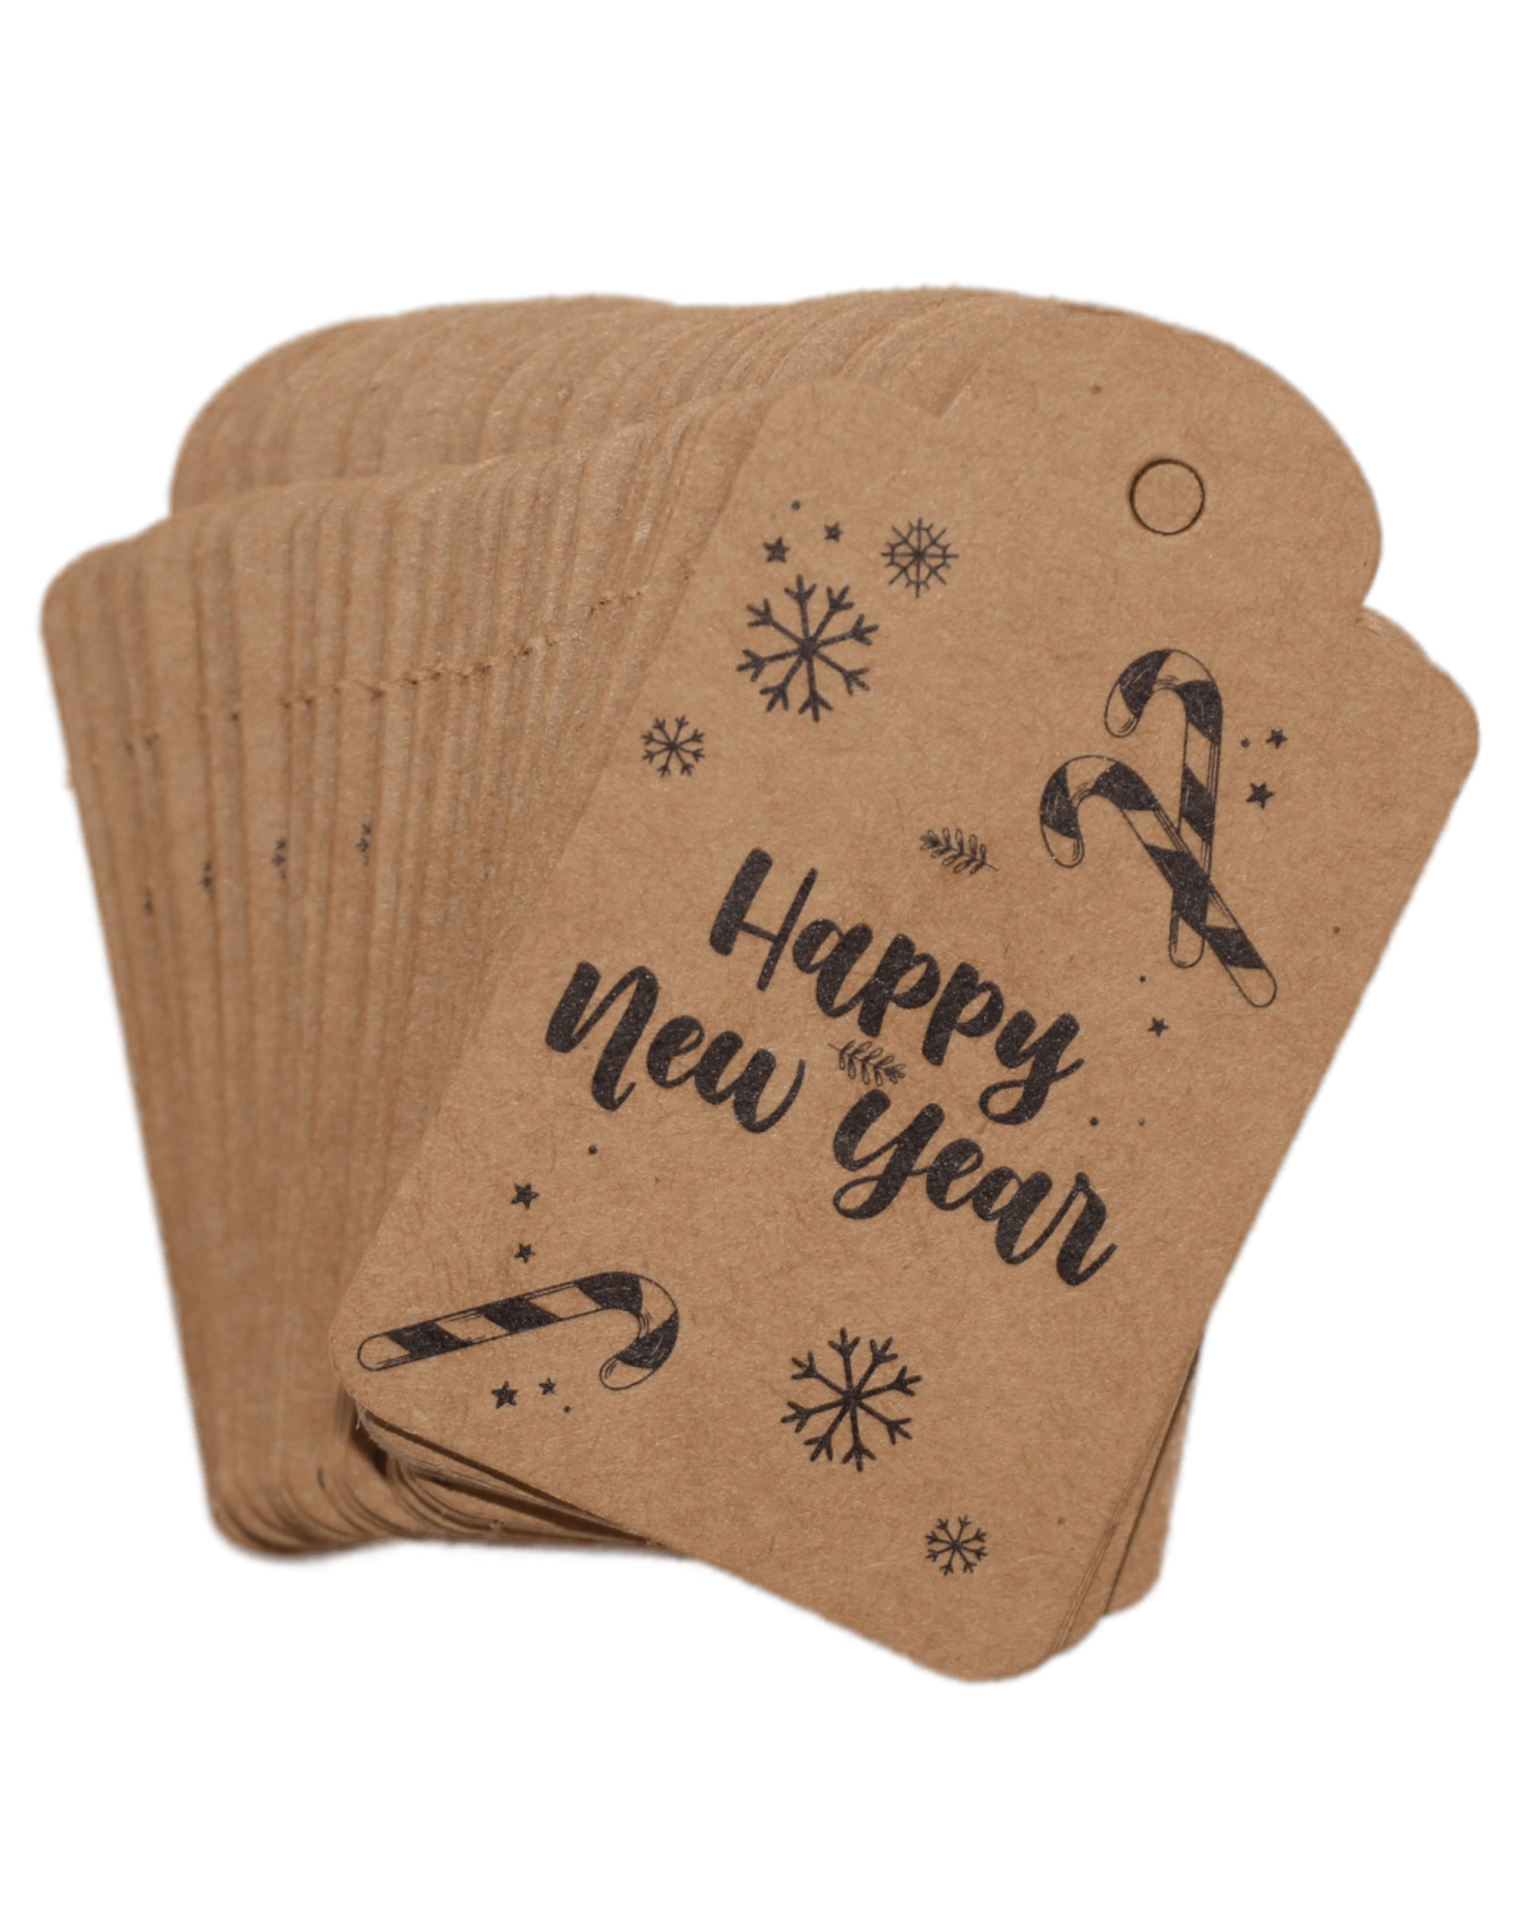 Yılbaşı Baskılı Kraft Etiket - 12 Adet - Happy New Year - Kubbe Etiket 4.5x7.5 cm I1